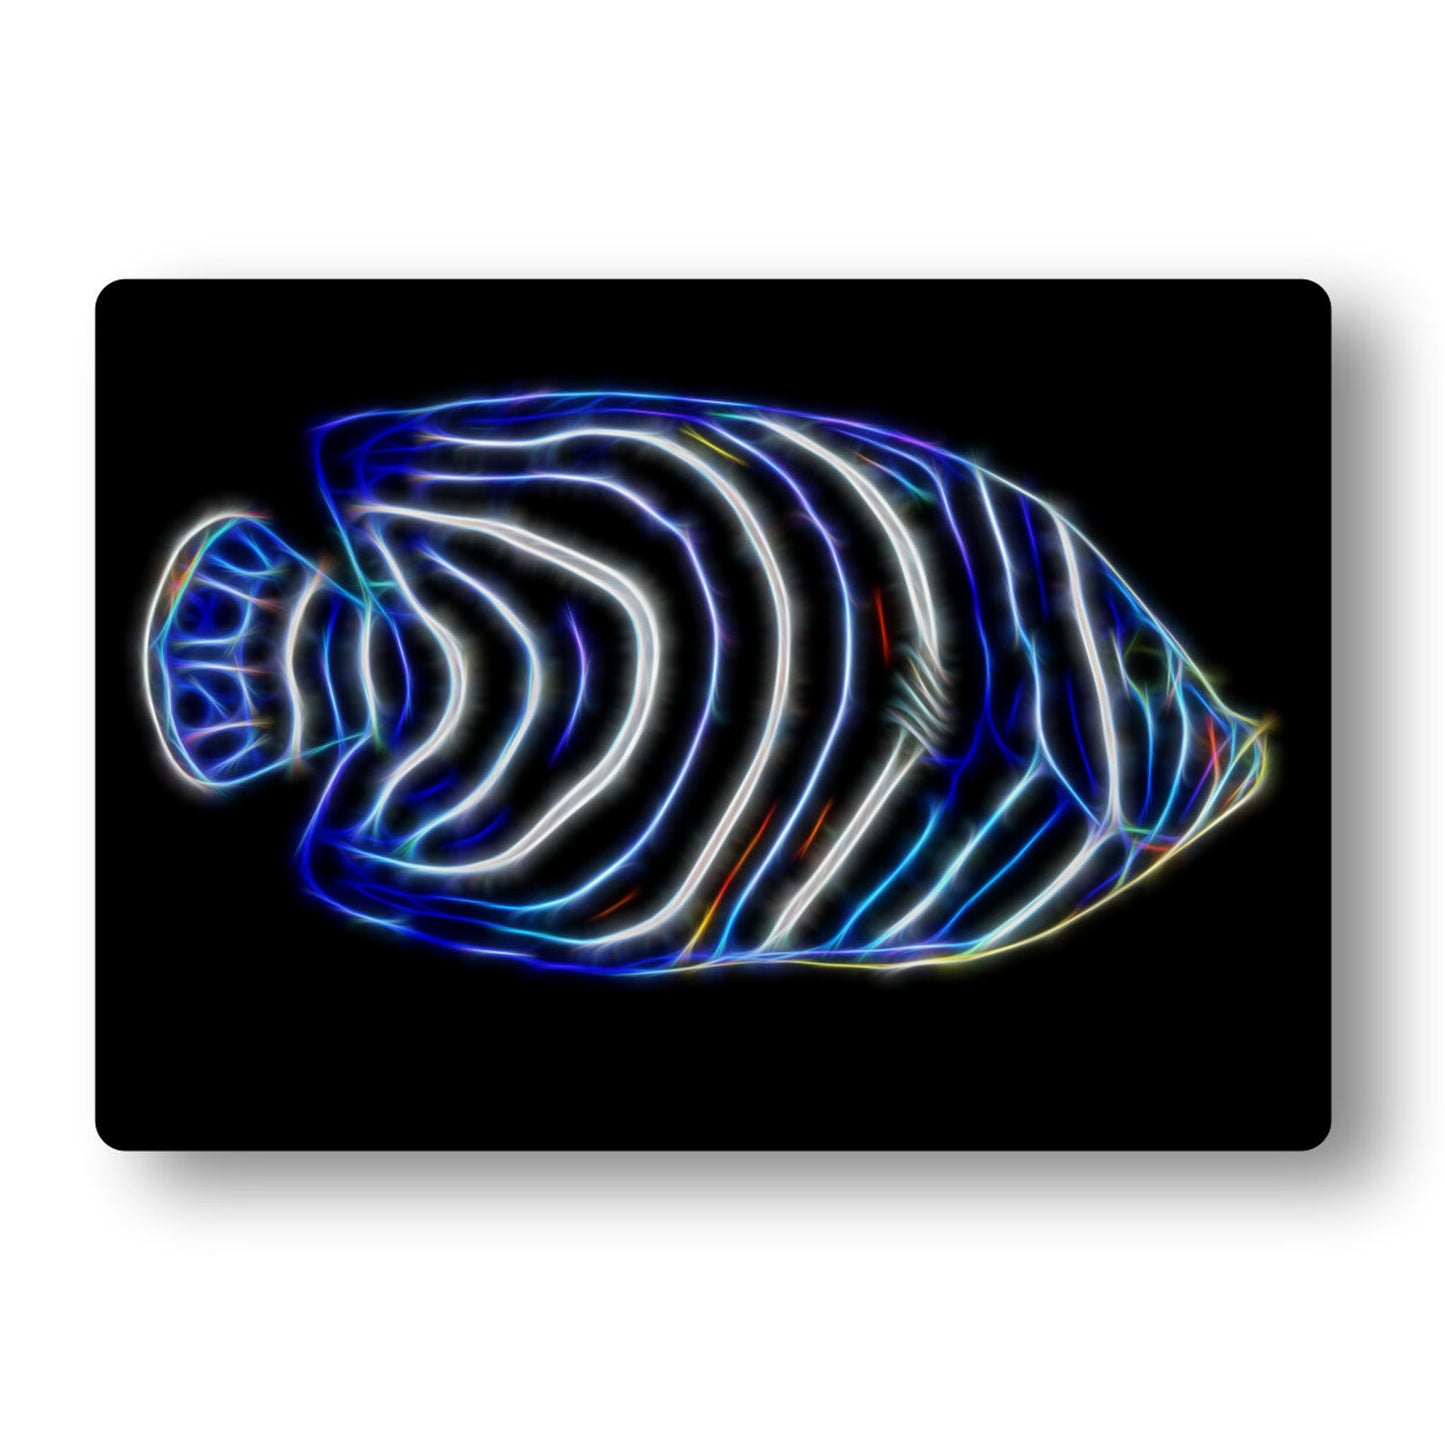 Emperor Angelfish (Pomacanthus Imperator)